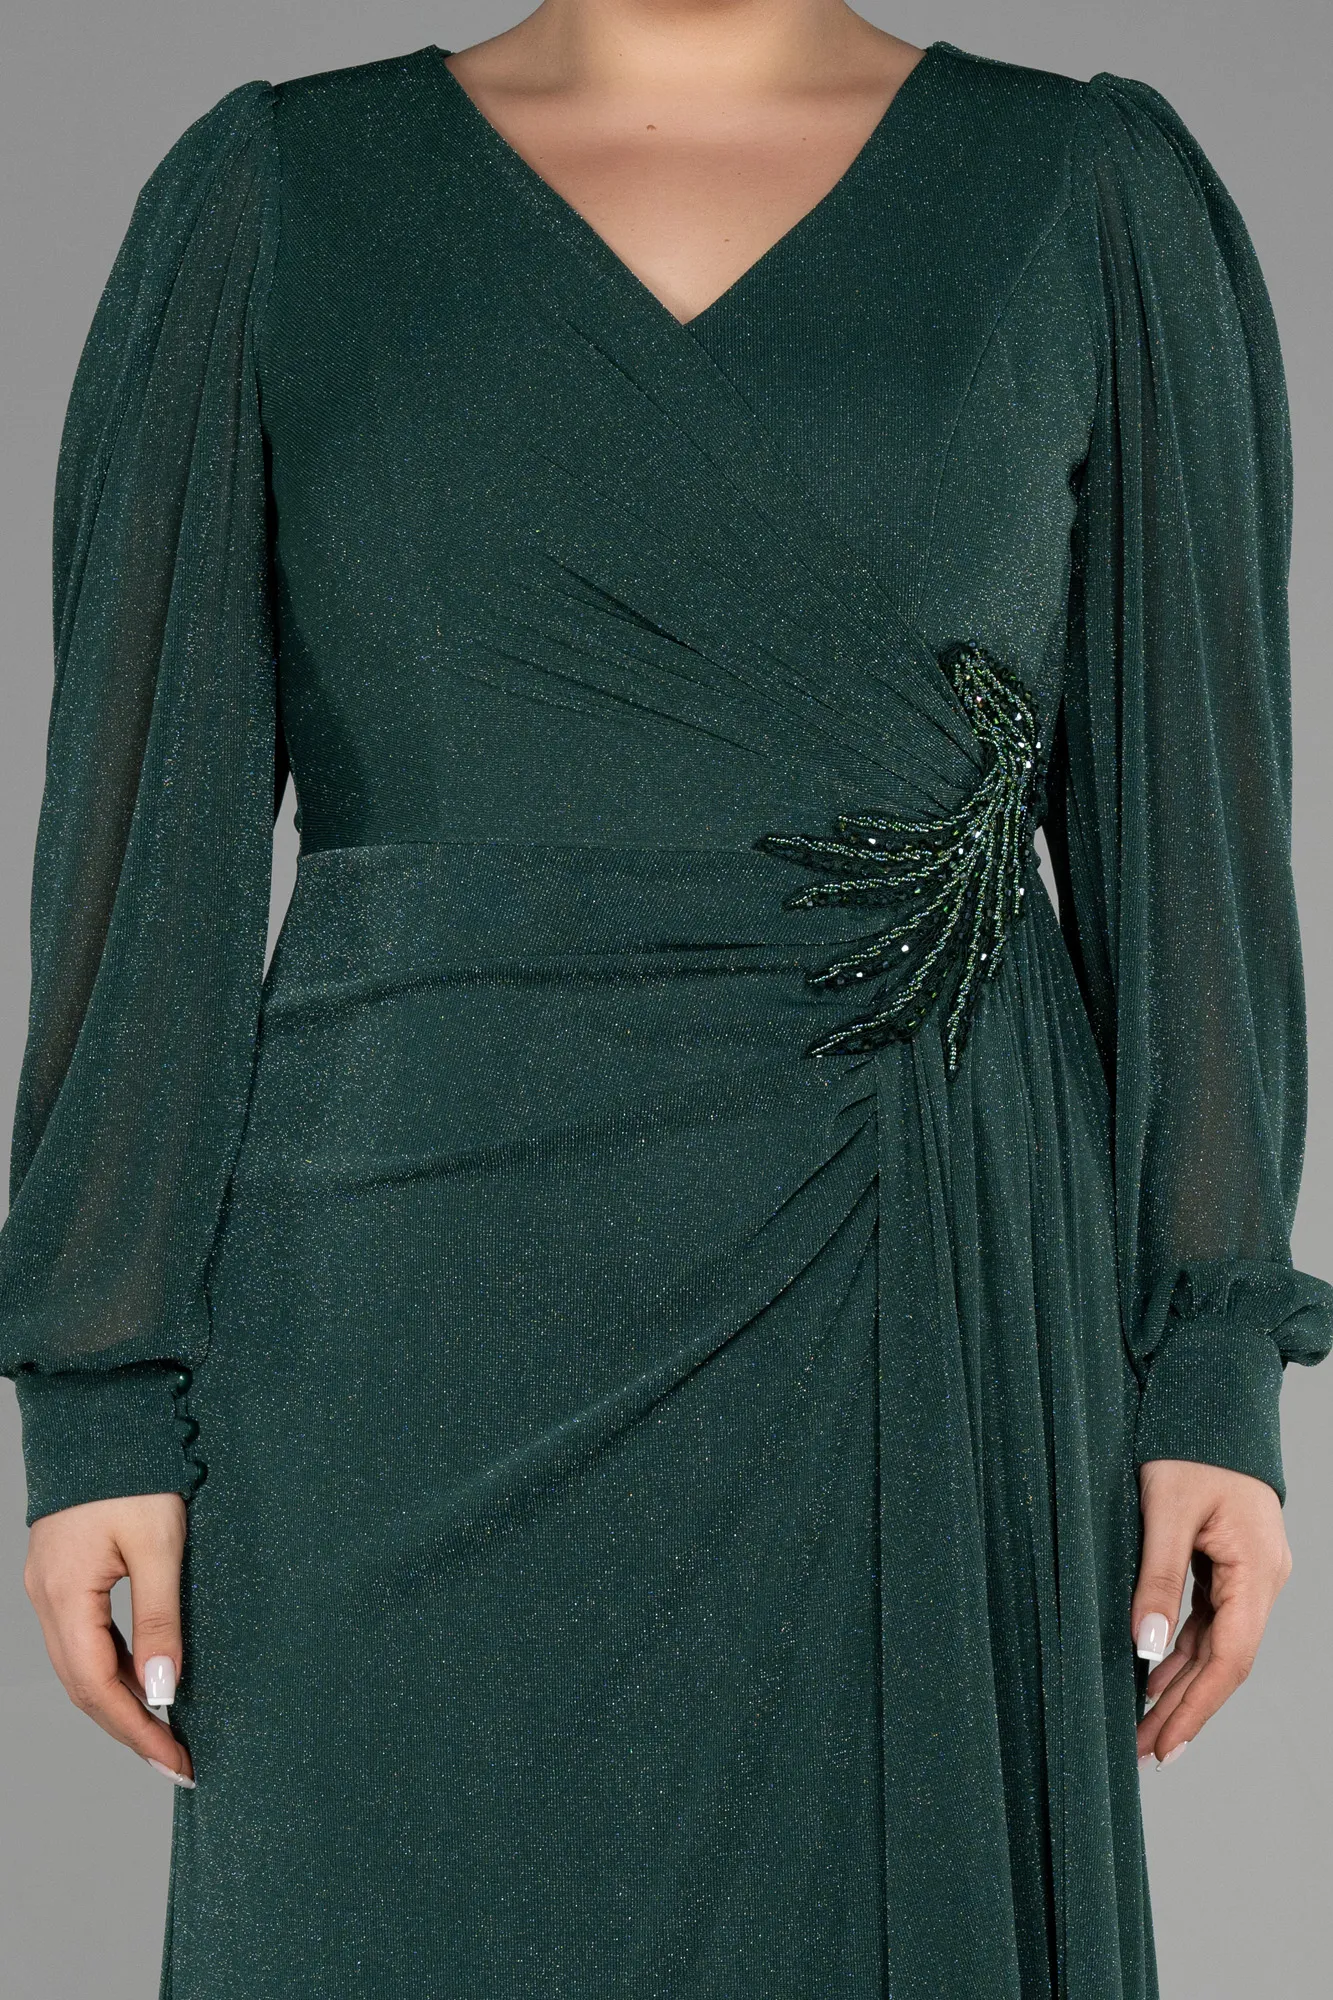 Emerald Green-Long Plus Size Evening Dress ABU3485